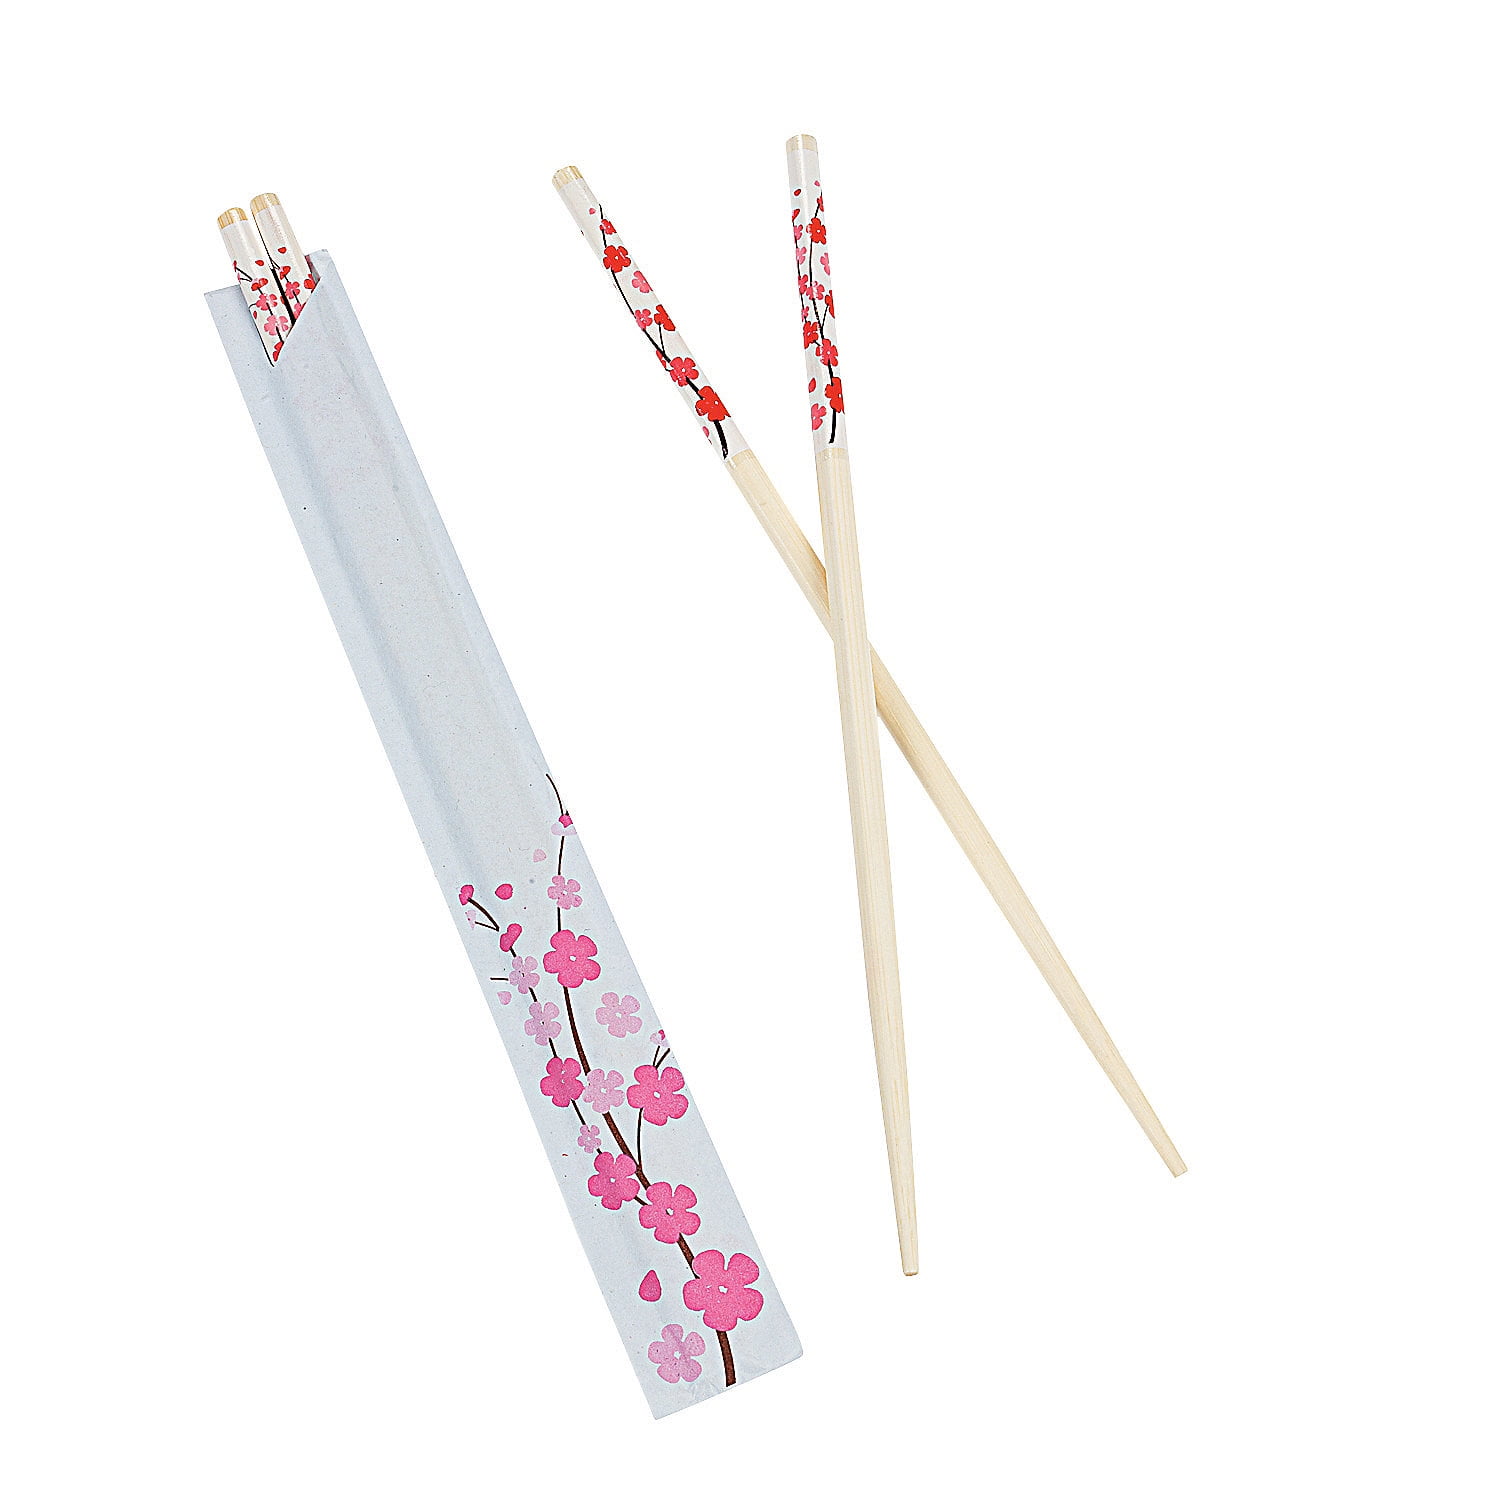 10 Pairs Classic Design Chinese Chopsticks Wedding Gift Present Dinner S^qk 